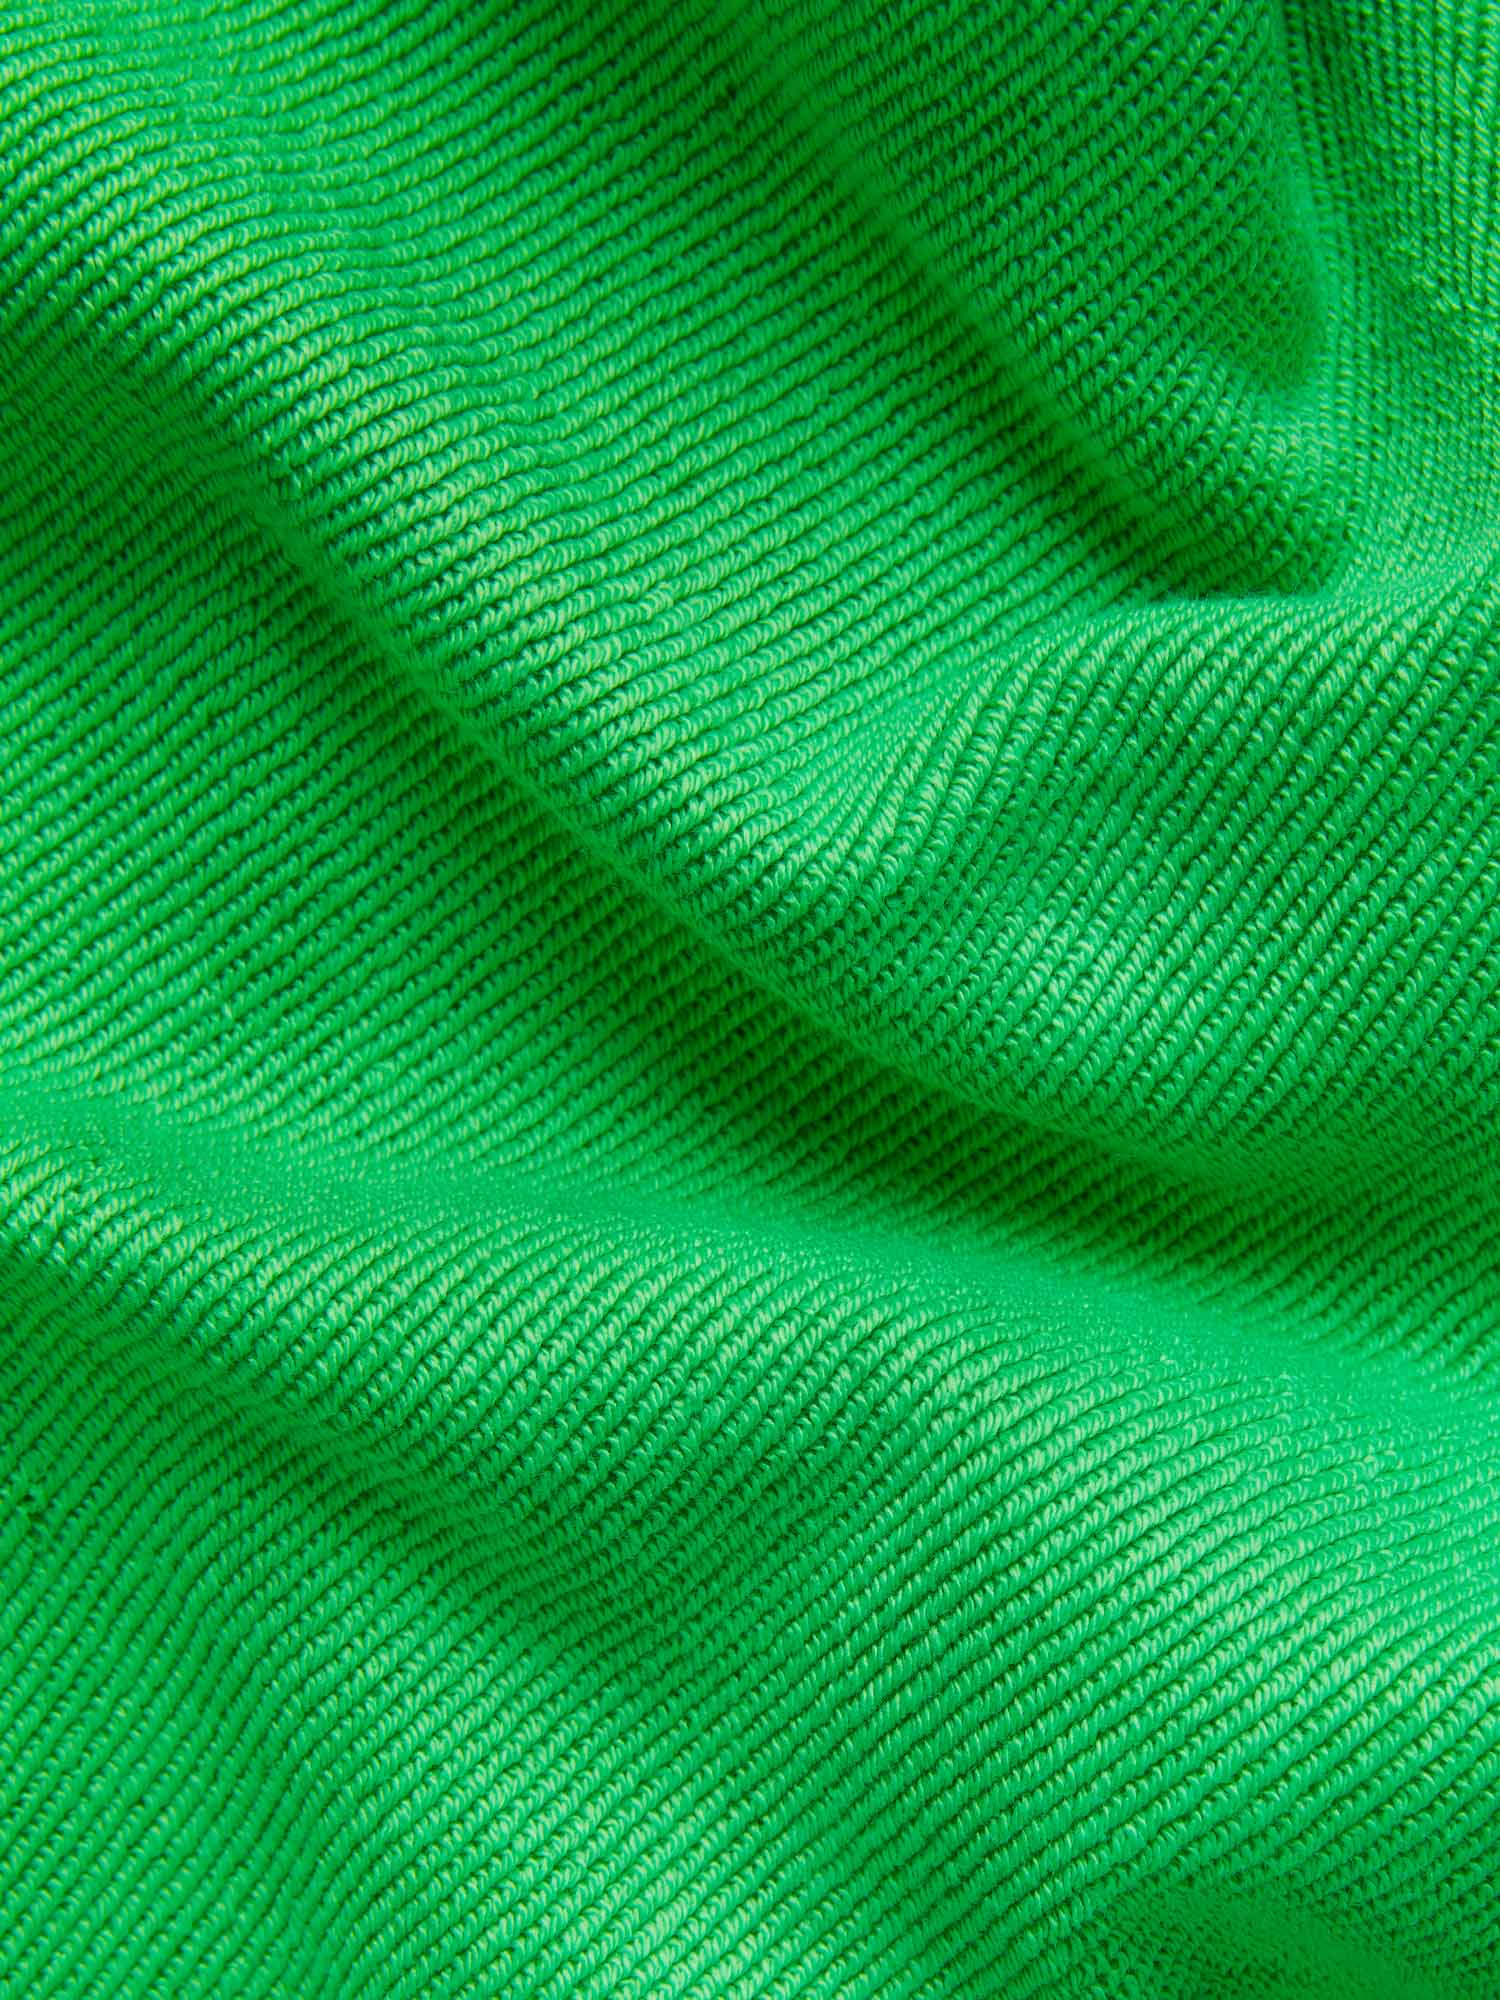 WAHP Sloth Kids Organic Cotton Sweatshirt Jade Green